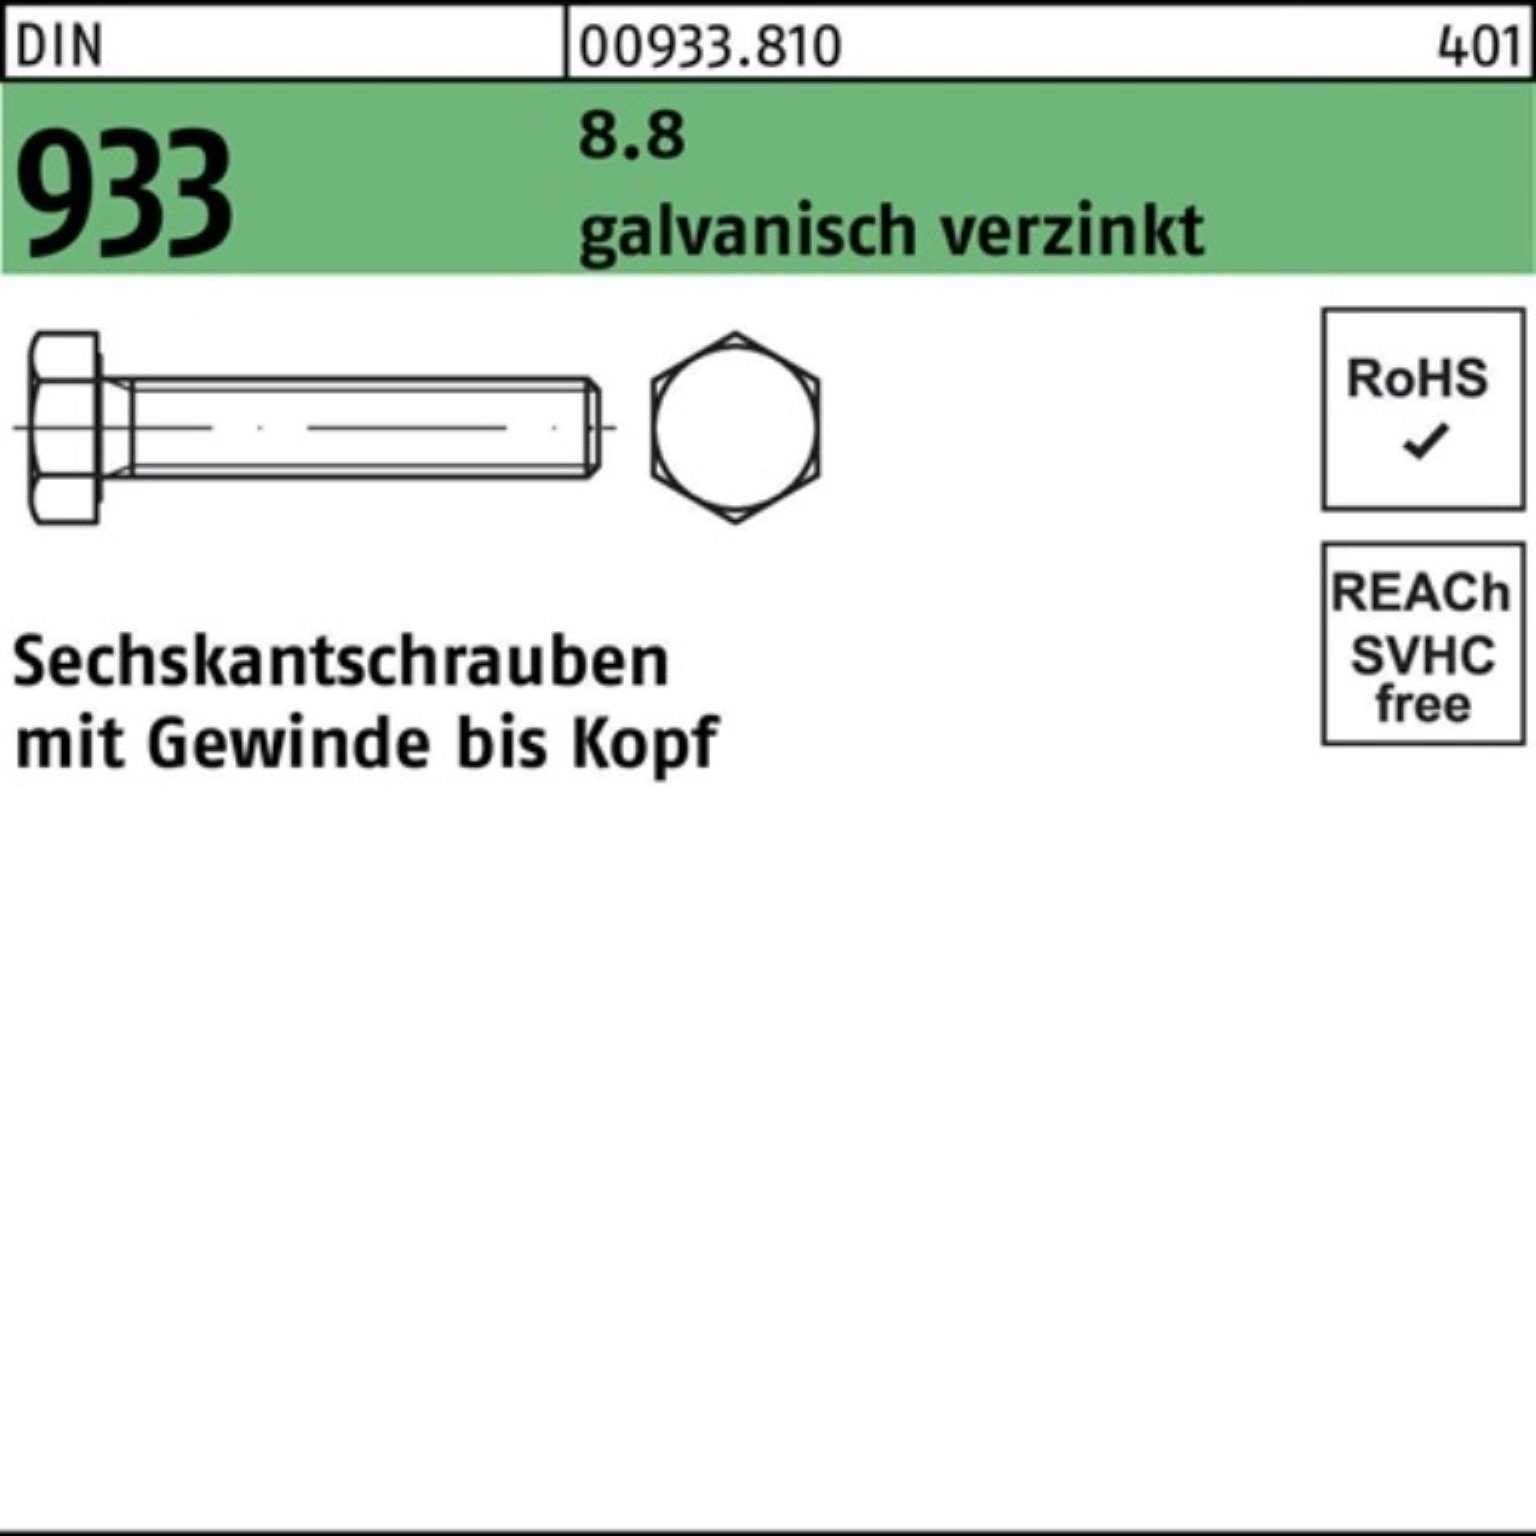 M3x VG 500er 40 Pack Sechskantschraube Stü 500 Sechskantschraube 8.8 DIN galv.verz. Reyher 933